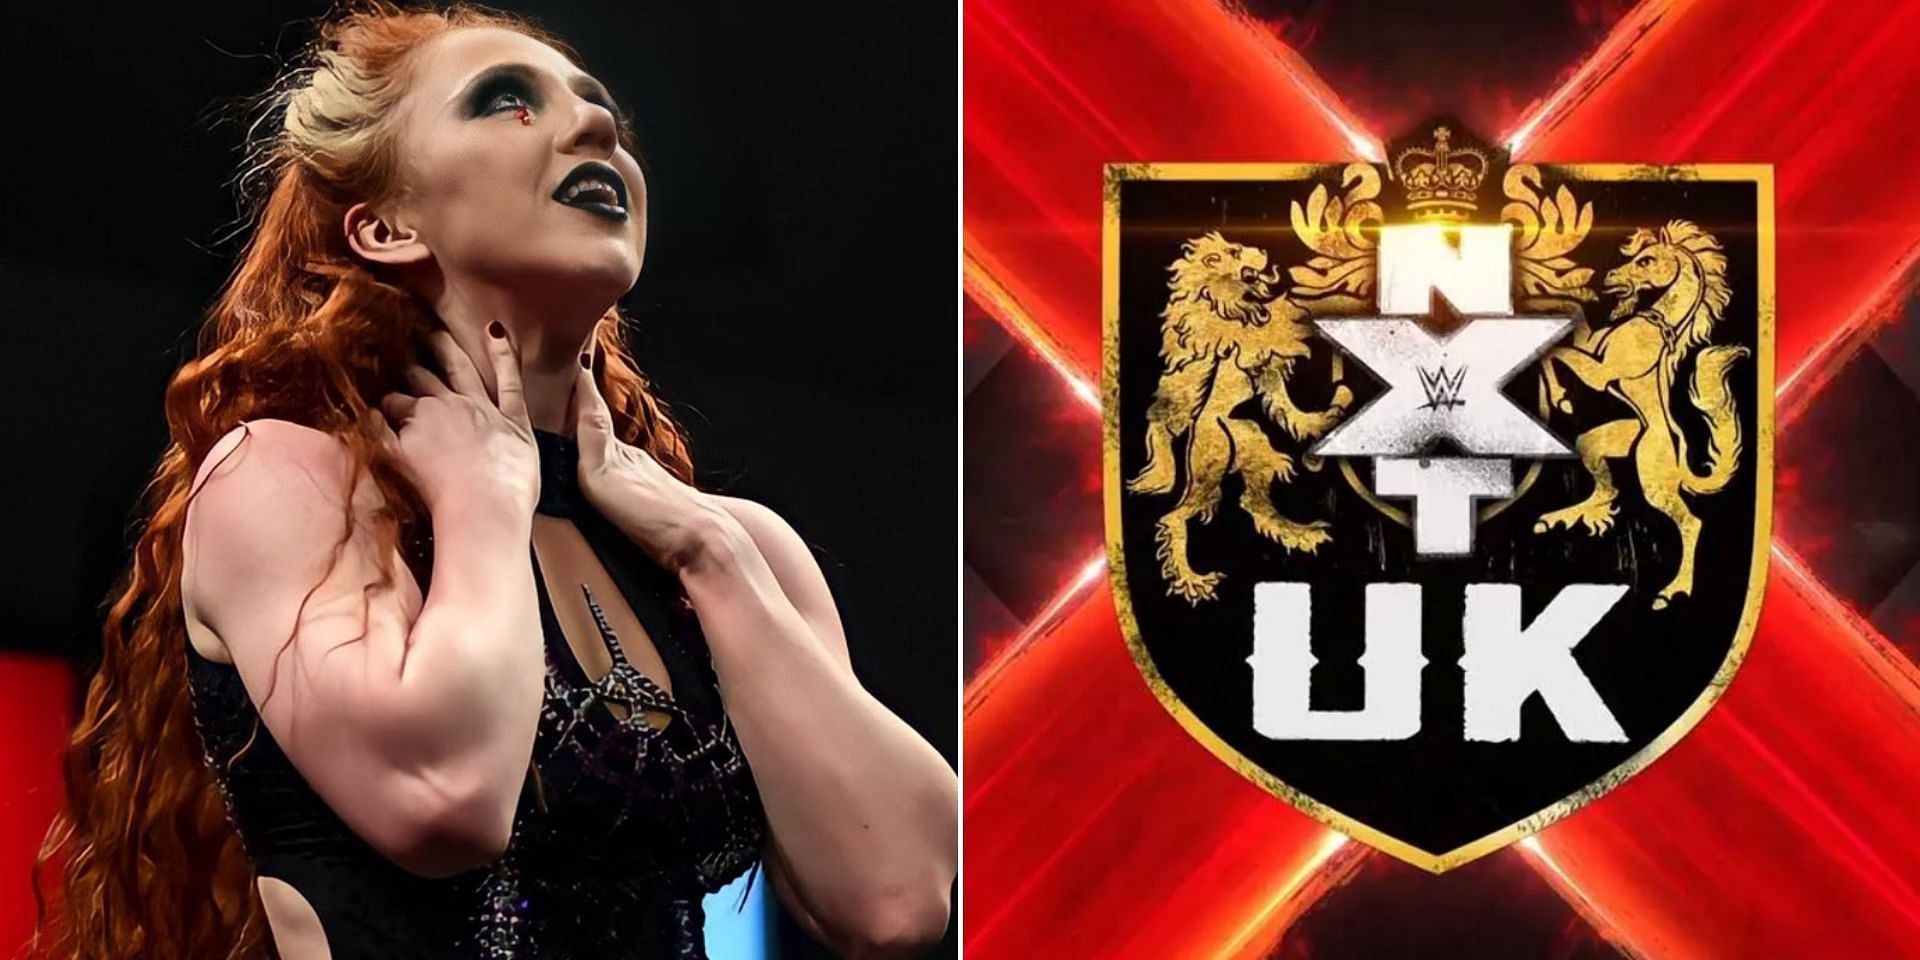 Isla Dawn is a former WWE NXT UK competitor